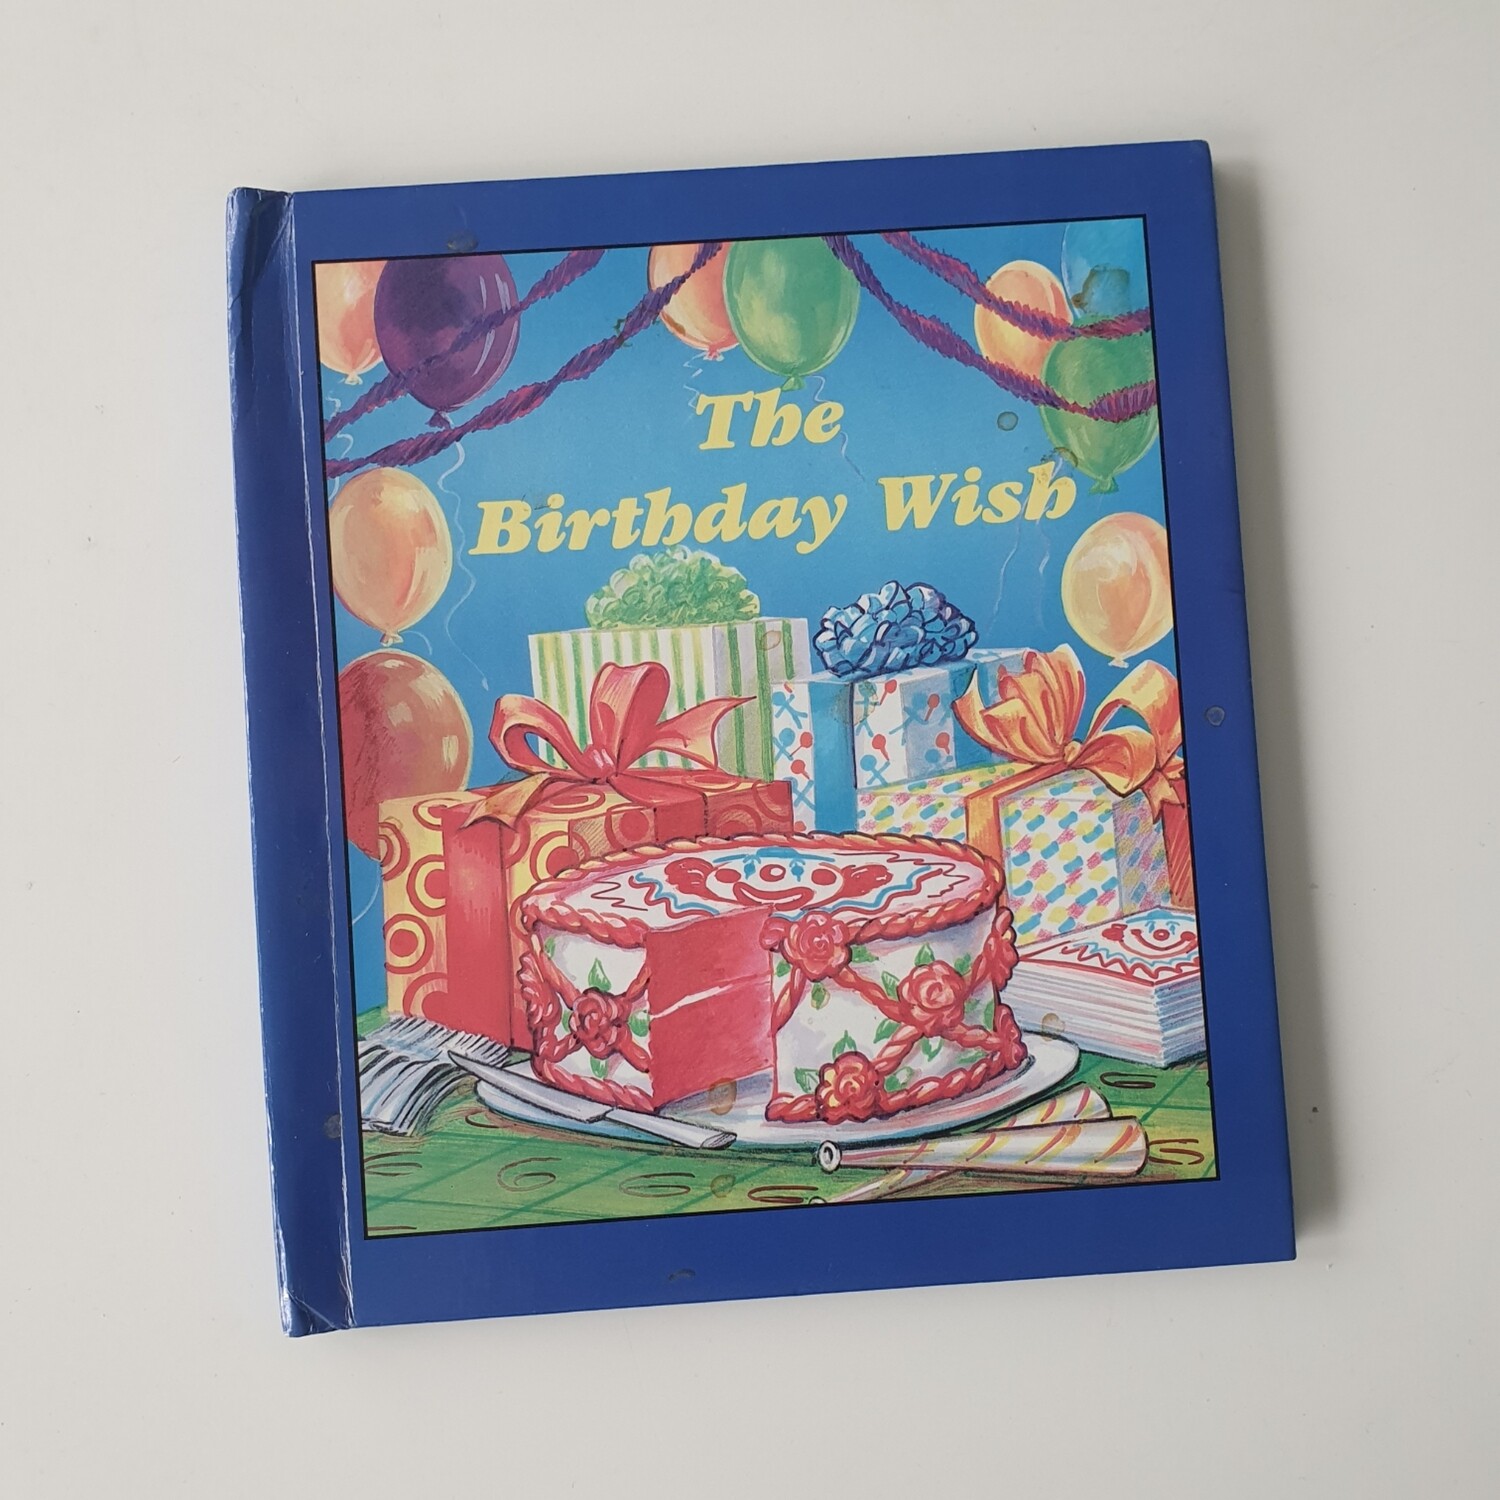 The Birthday Wish - cake and presents, genie